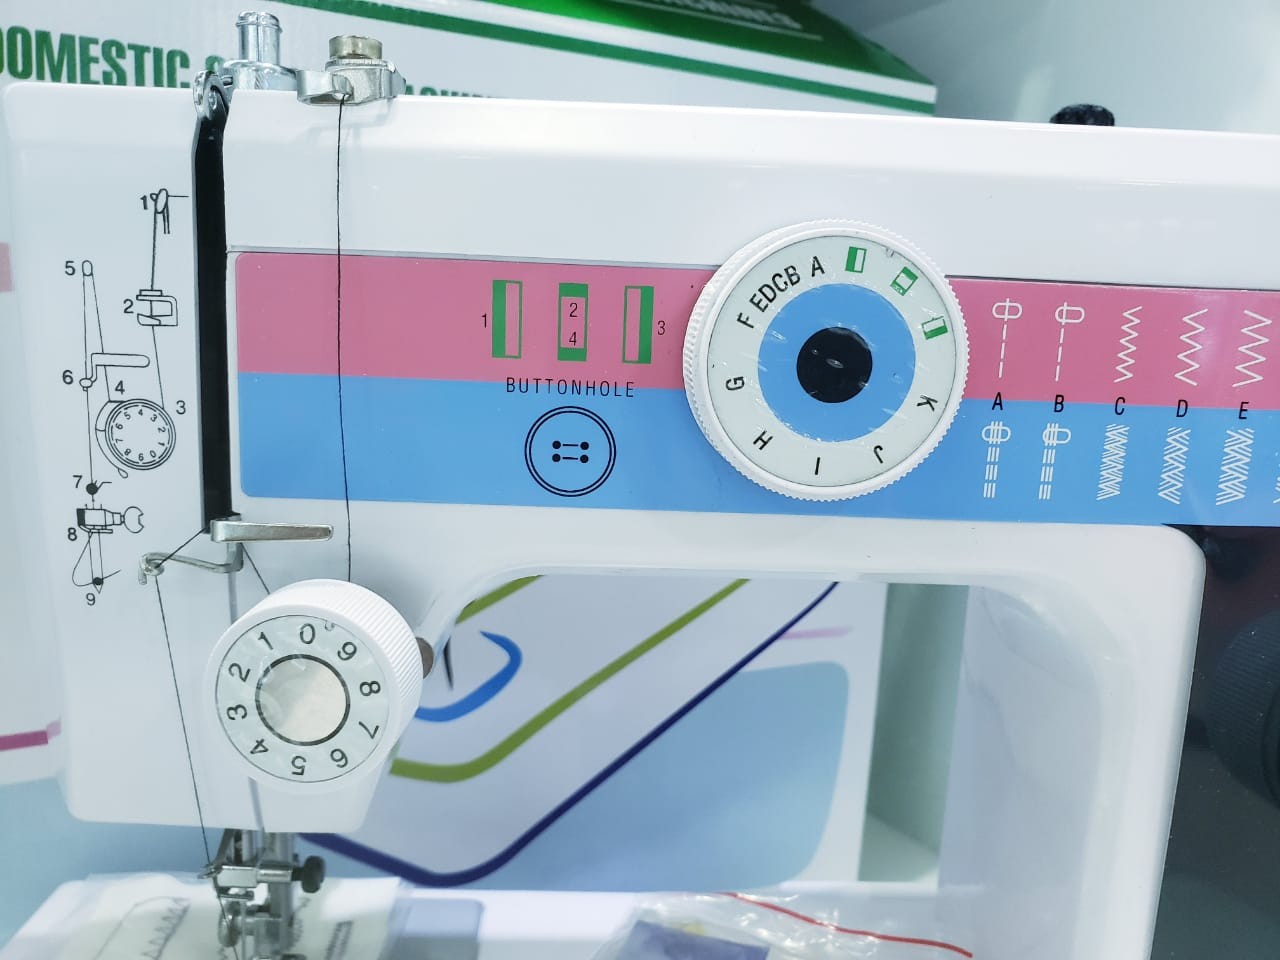 equipos profesionales - Maquina de coser Electrica multifuncional profesional JUKKY FH653 1